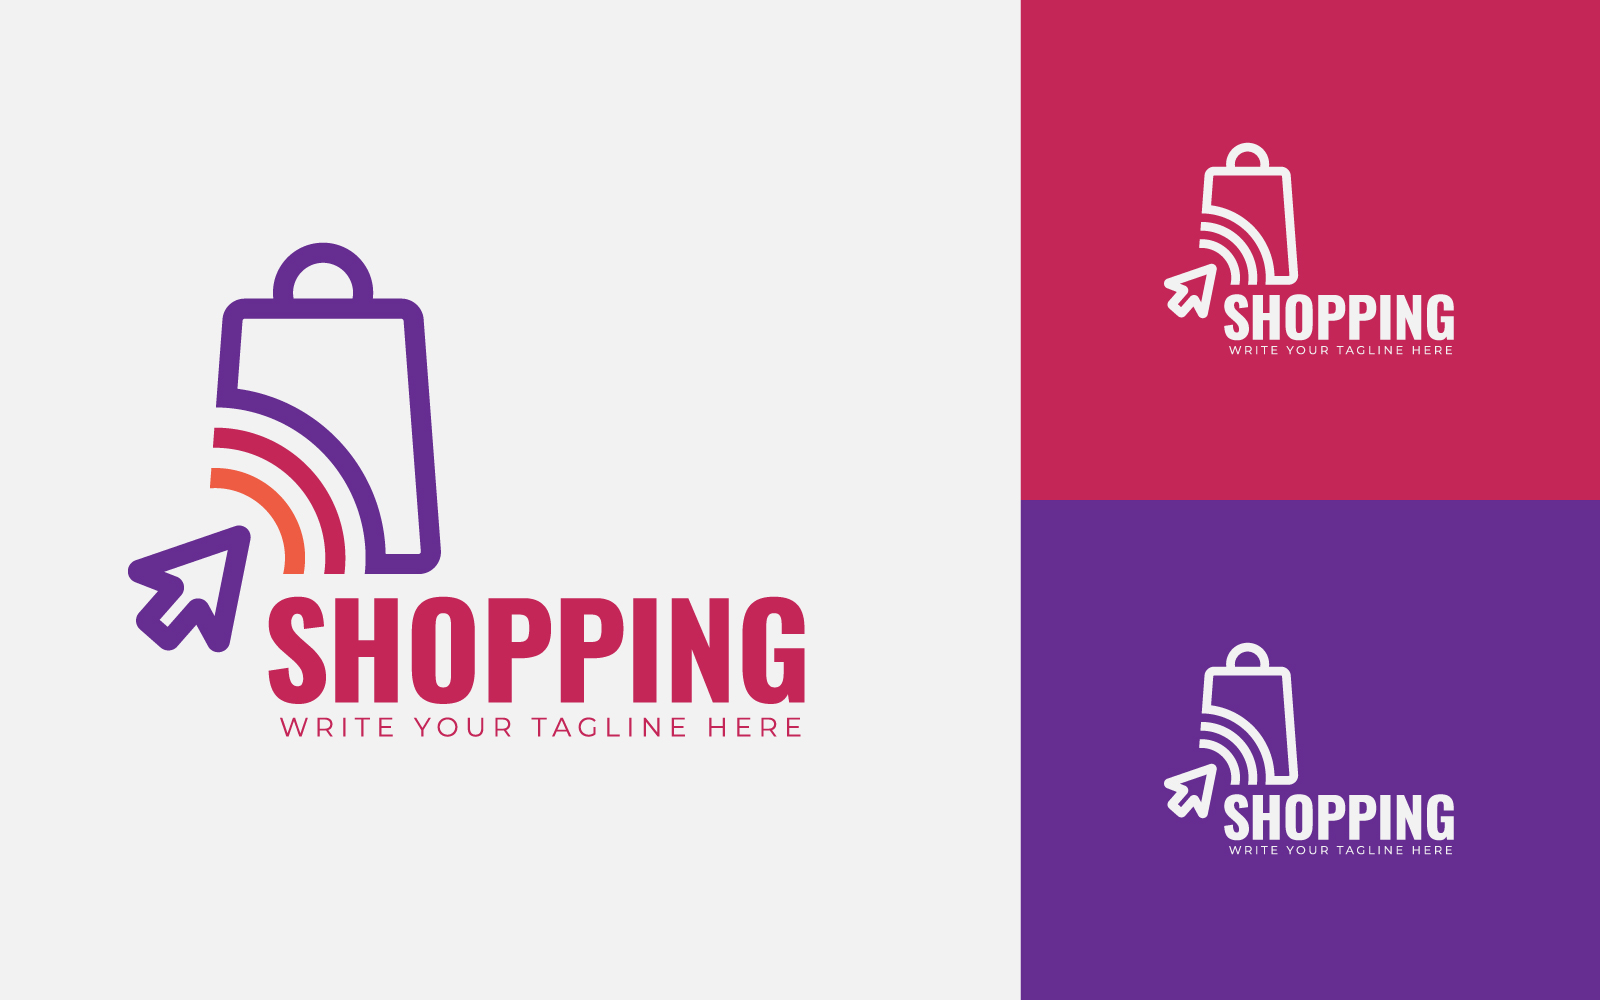 Online Shopping Logo Design Template For E-Commerce Web Or Business.